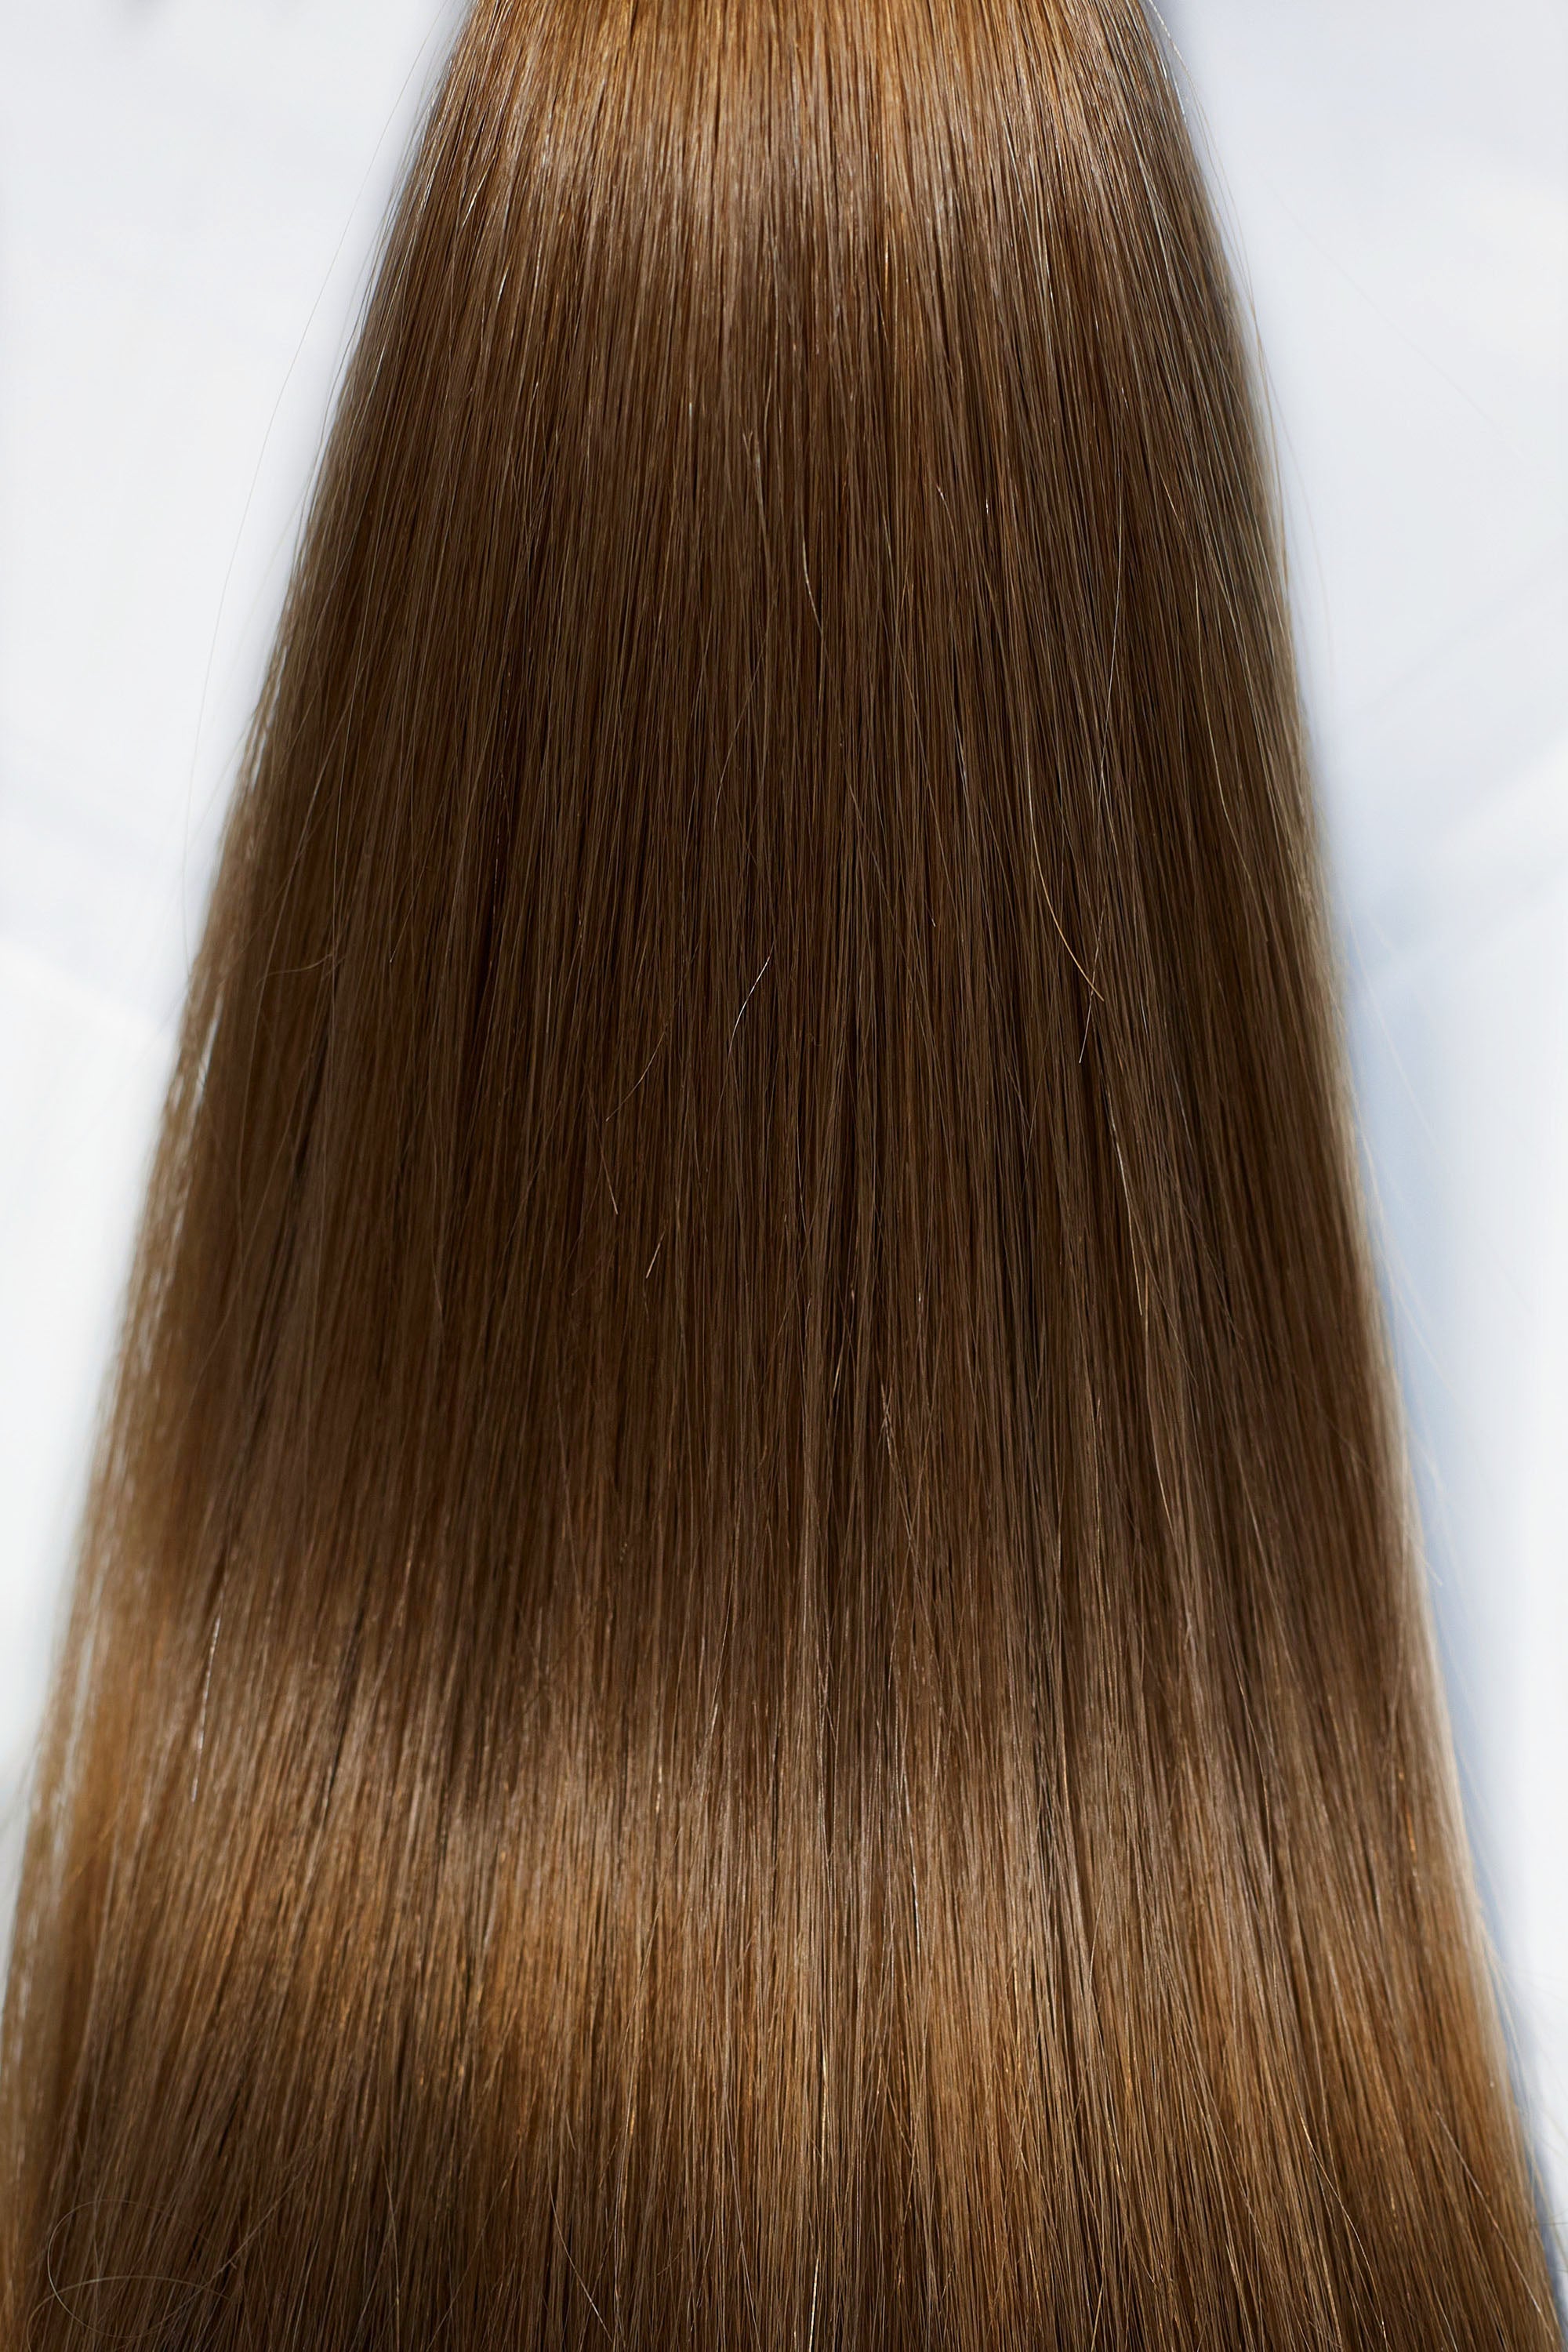 Behair professional Keratin Tip "Premium" 20" (50cm) Natural Straight Chestnut #6 - 25g (Micro - 0.5g each pcs) hair extensions